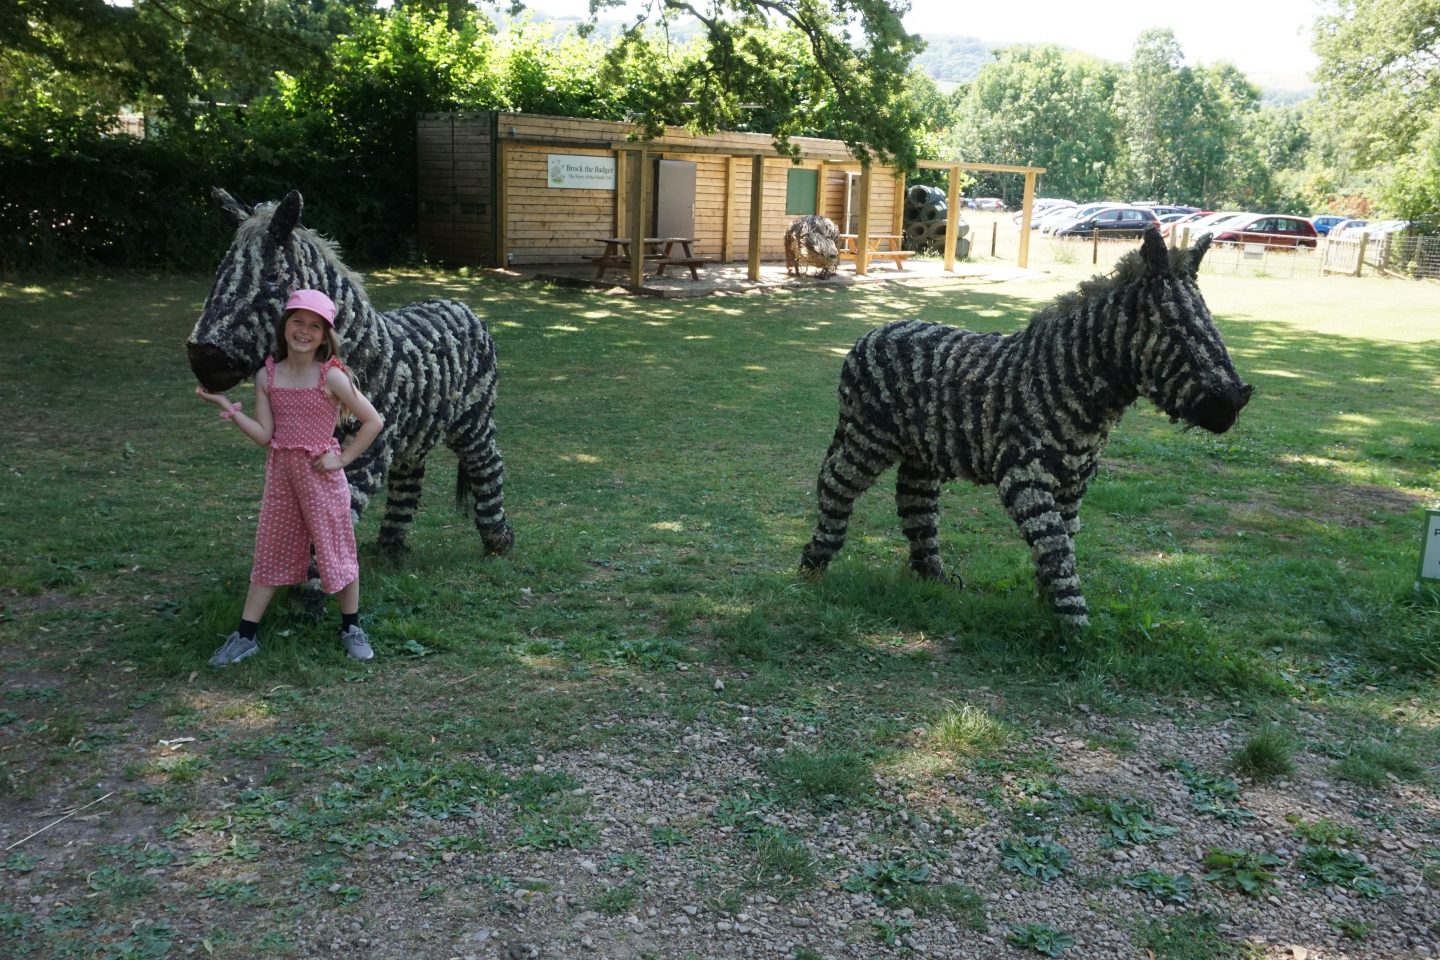 Girl dressed in pink stood beside two zebra sculptures